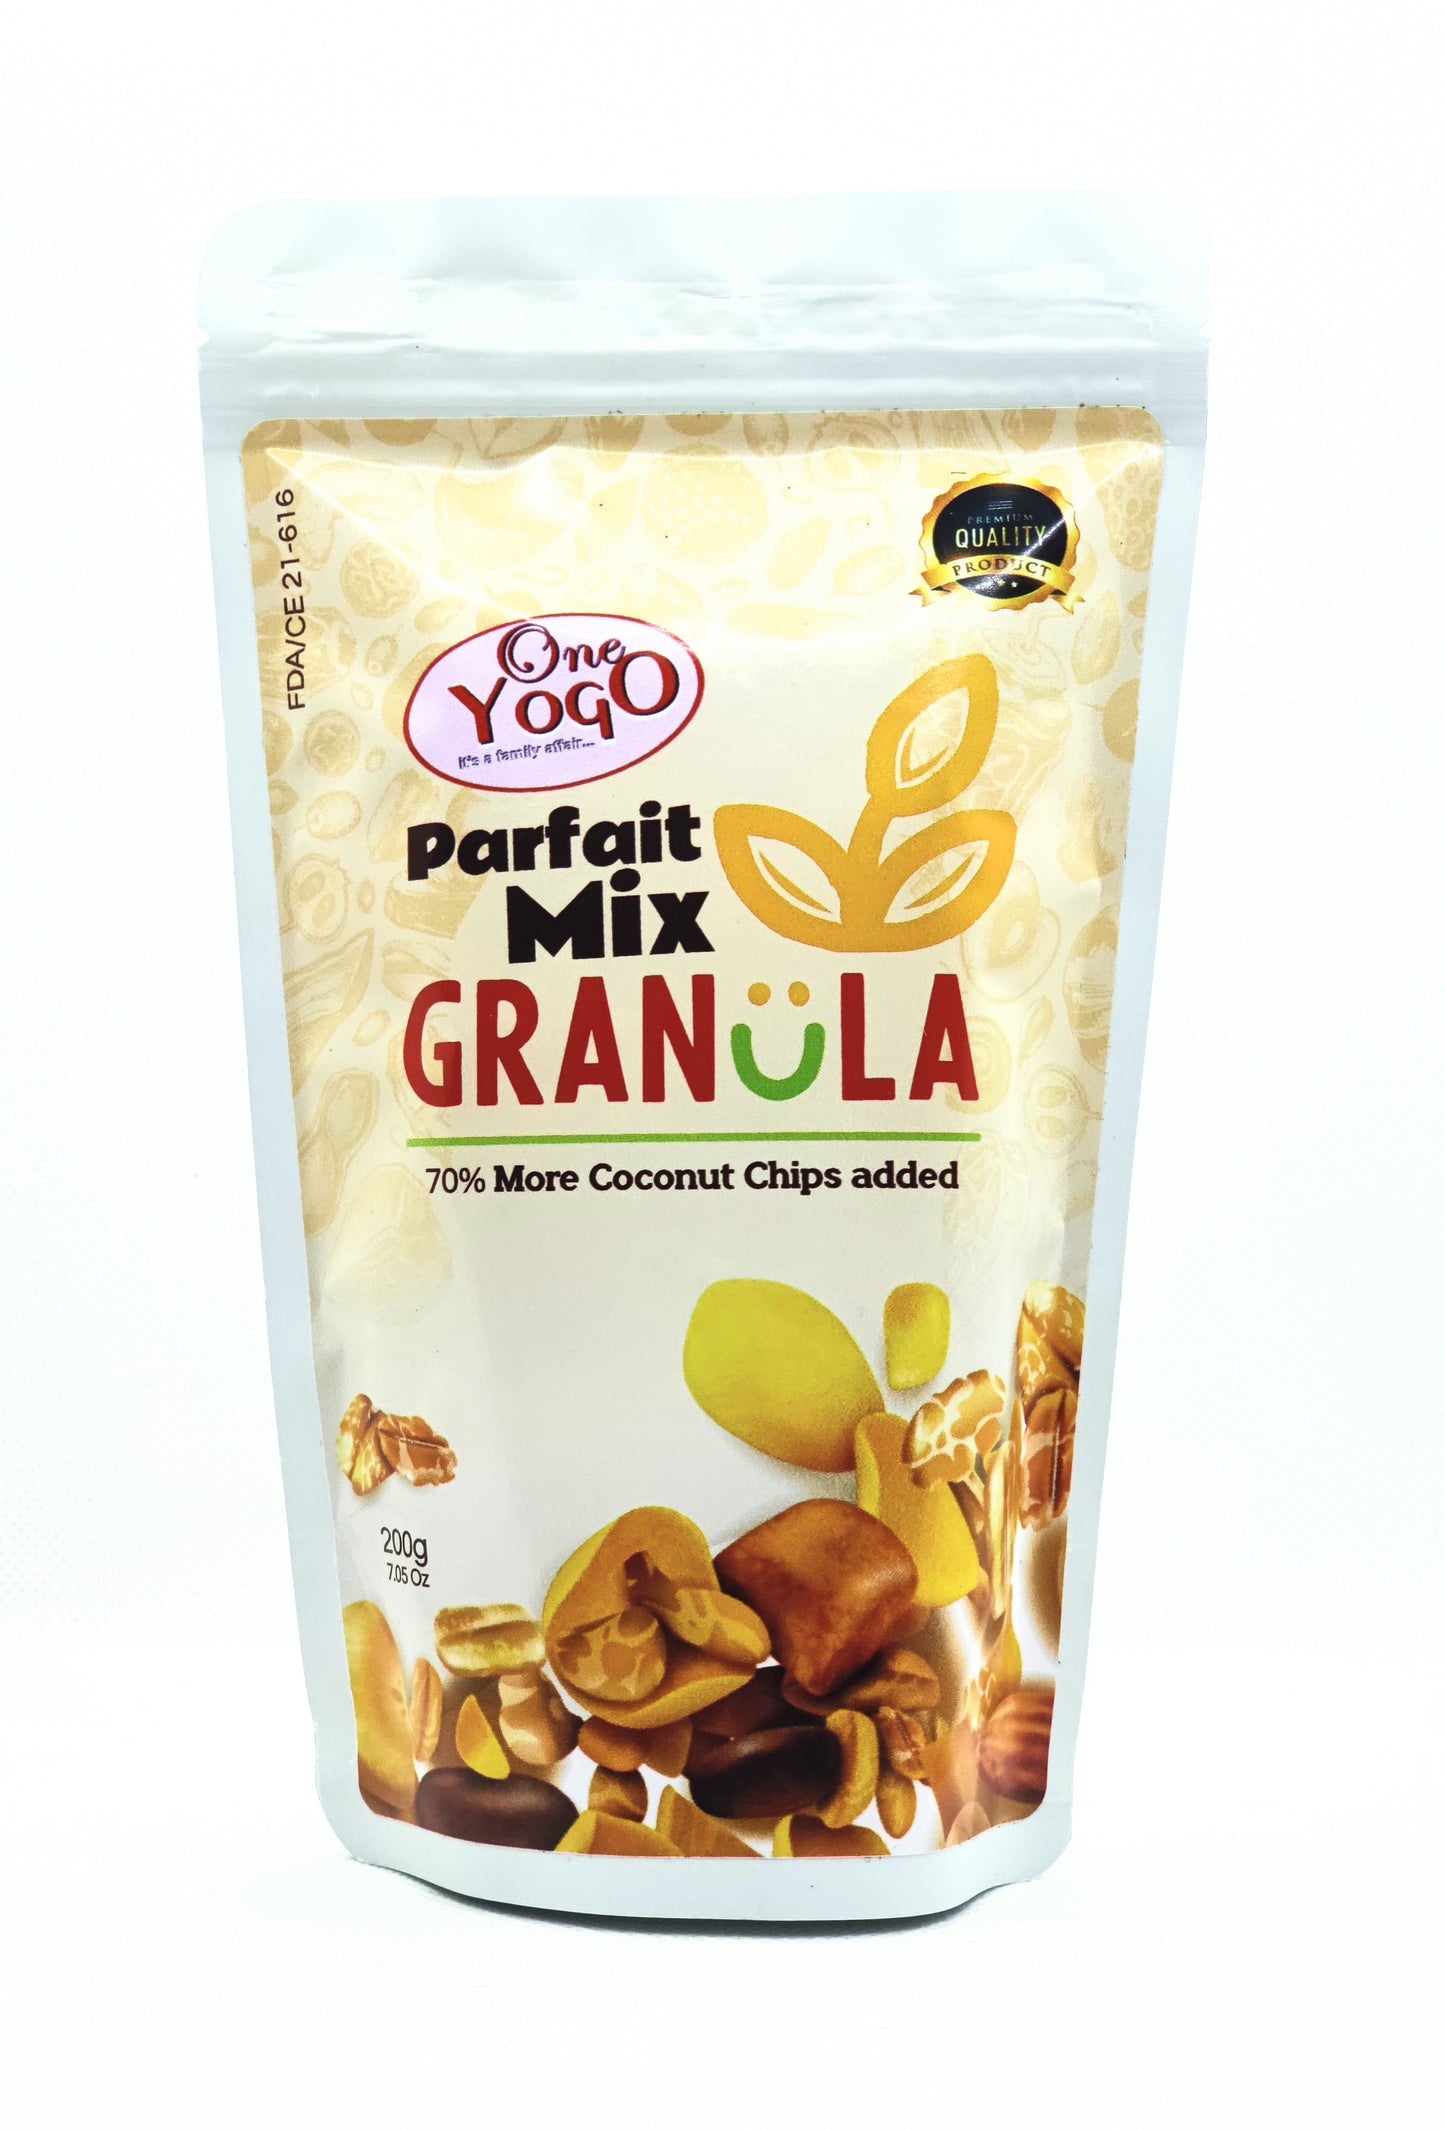 200 gram bag of one yogo parfait mix granola